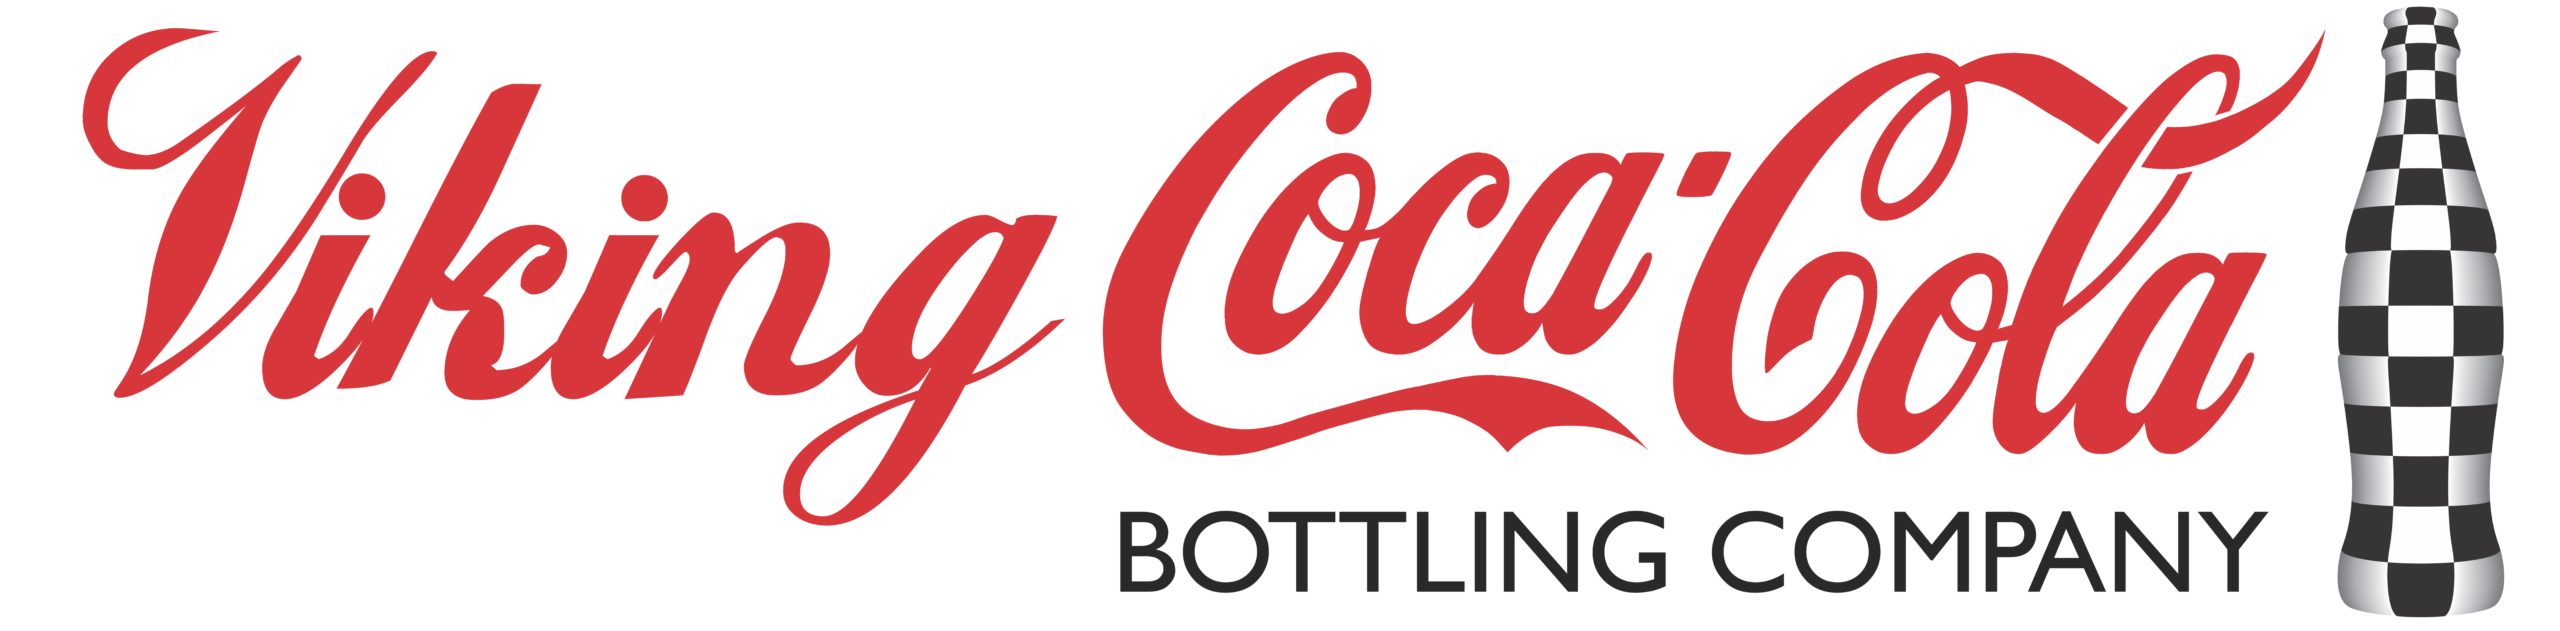 Viking Coca-Cola Logo